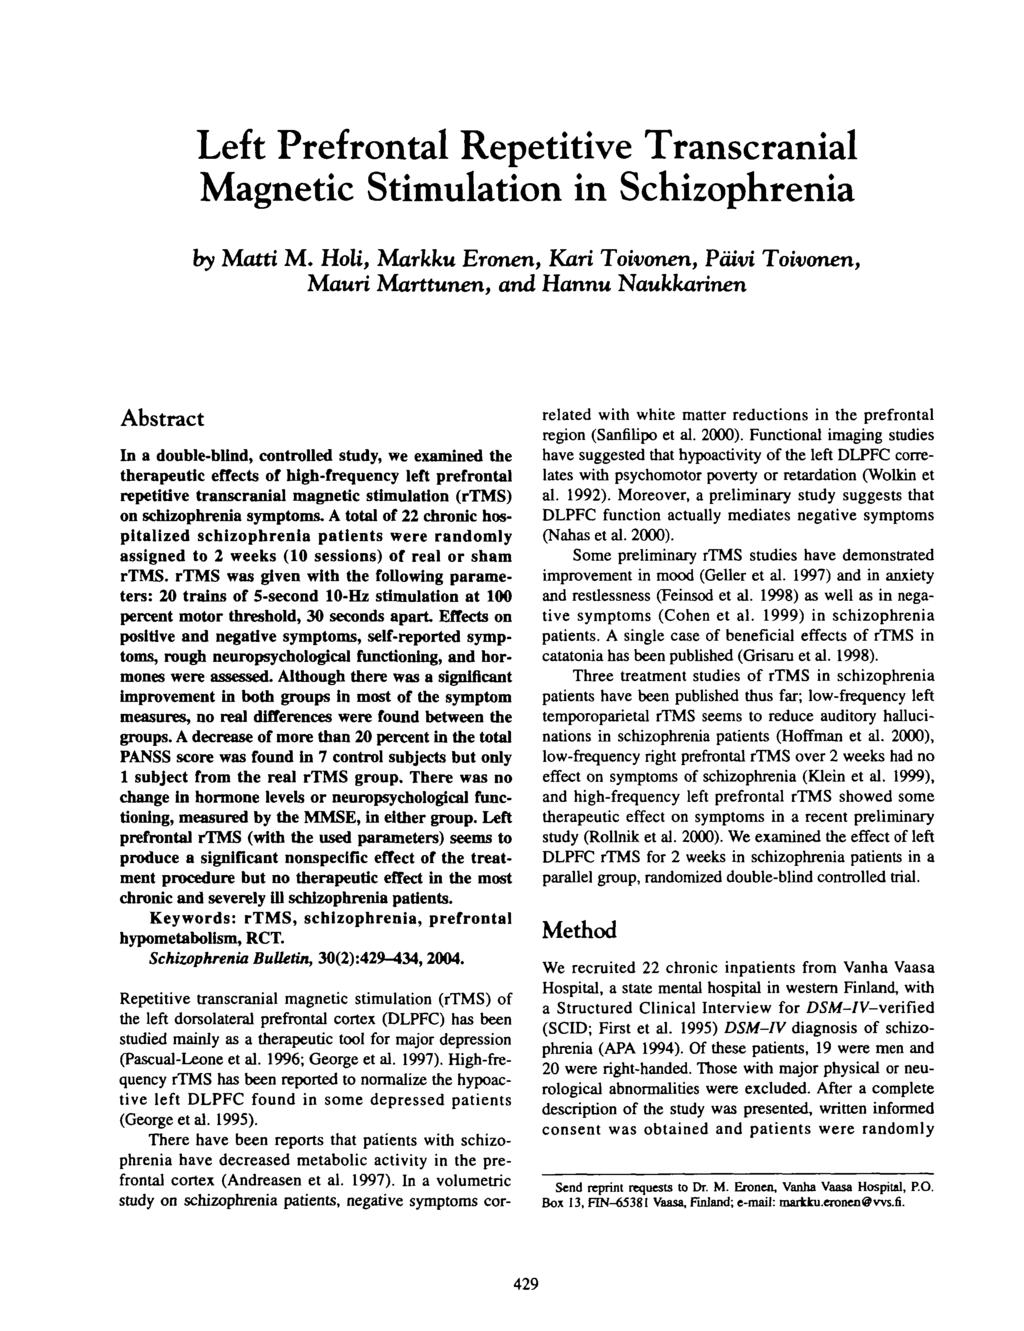 Left Prefrontal Repetitive Transcranial Magnetic Stimulation in Schizophrenia by Matti M.